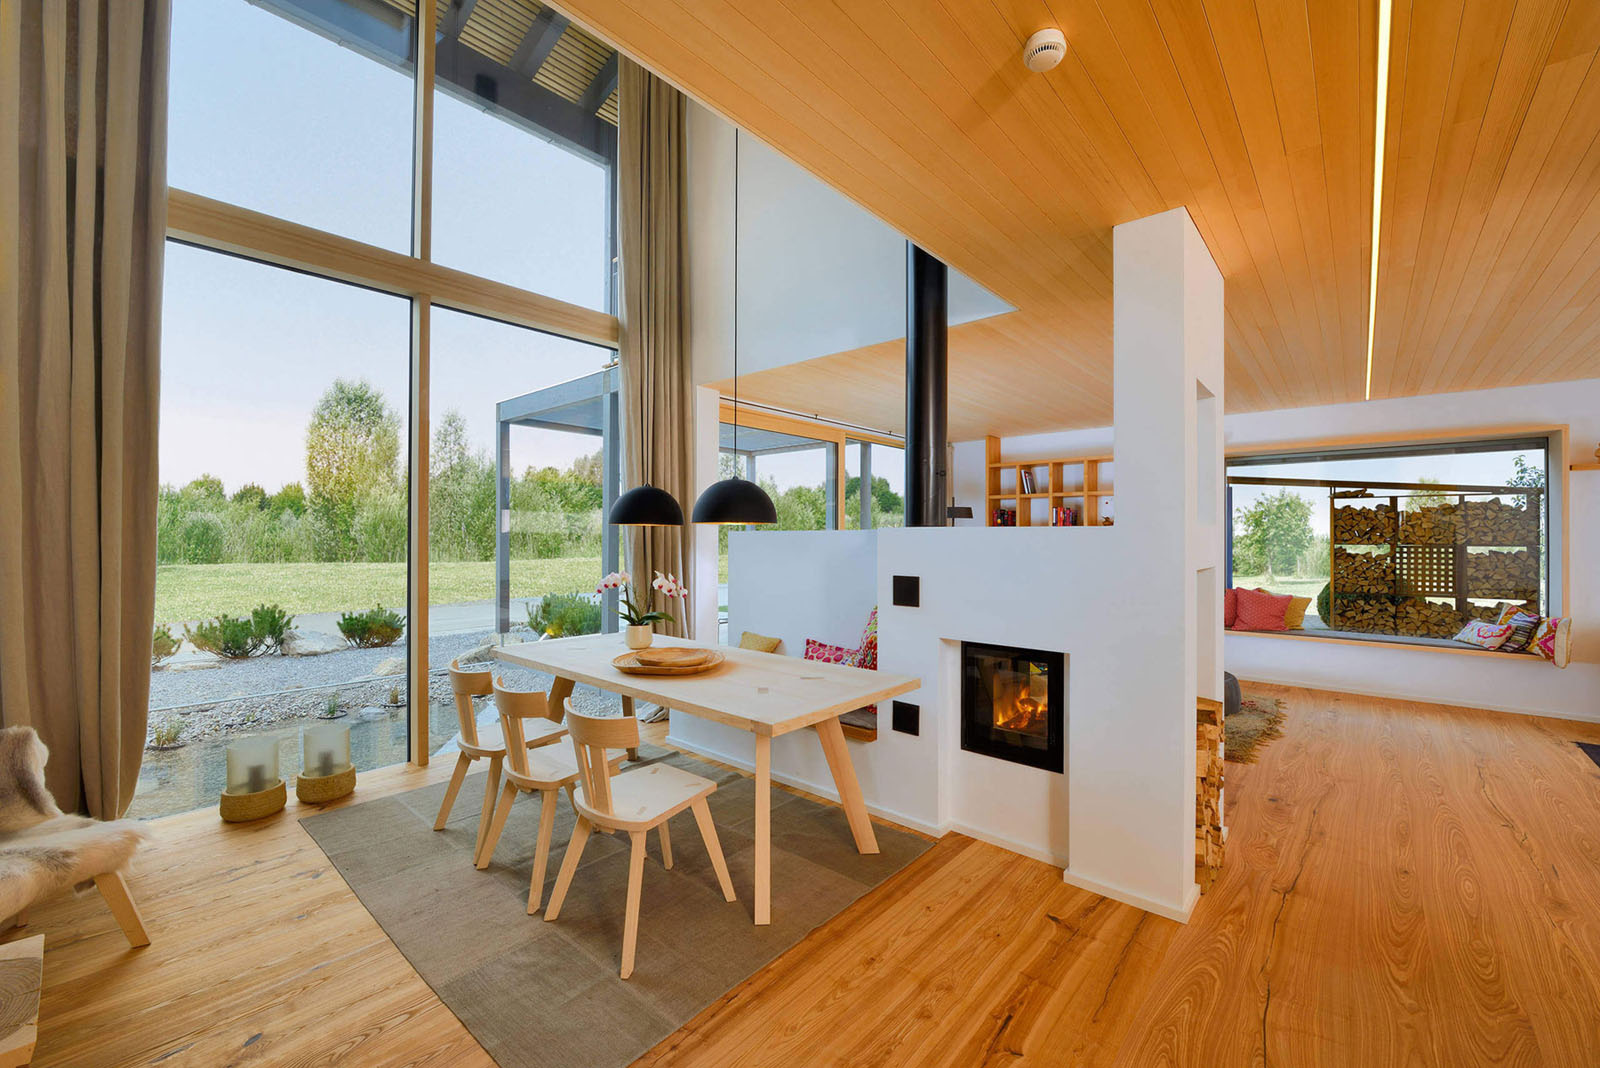 Bauhaus Inspired Energy Saving House With Modern Alpine